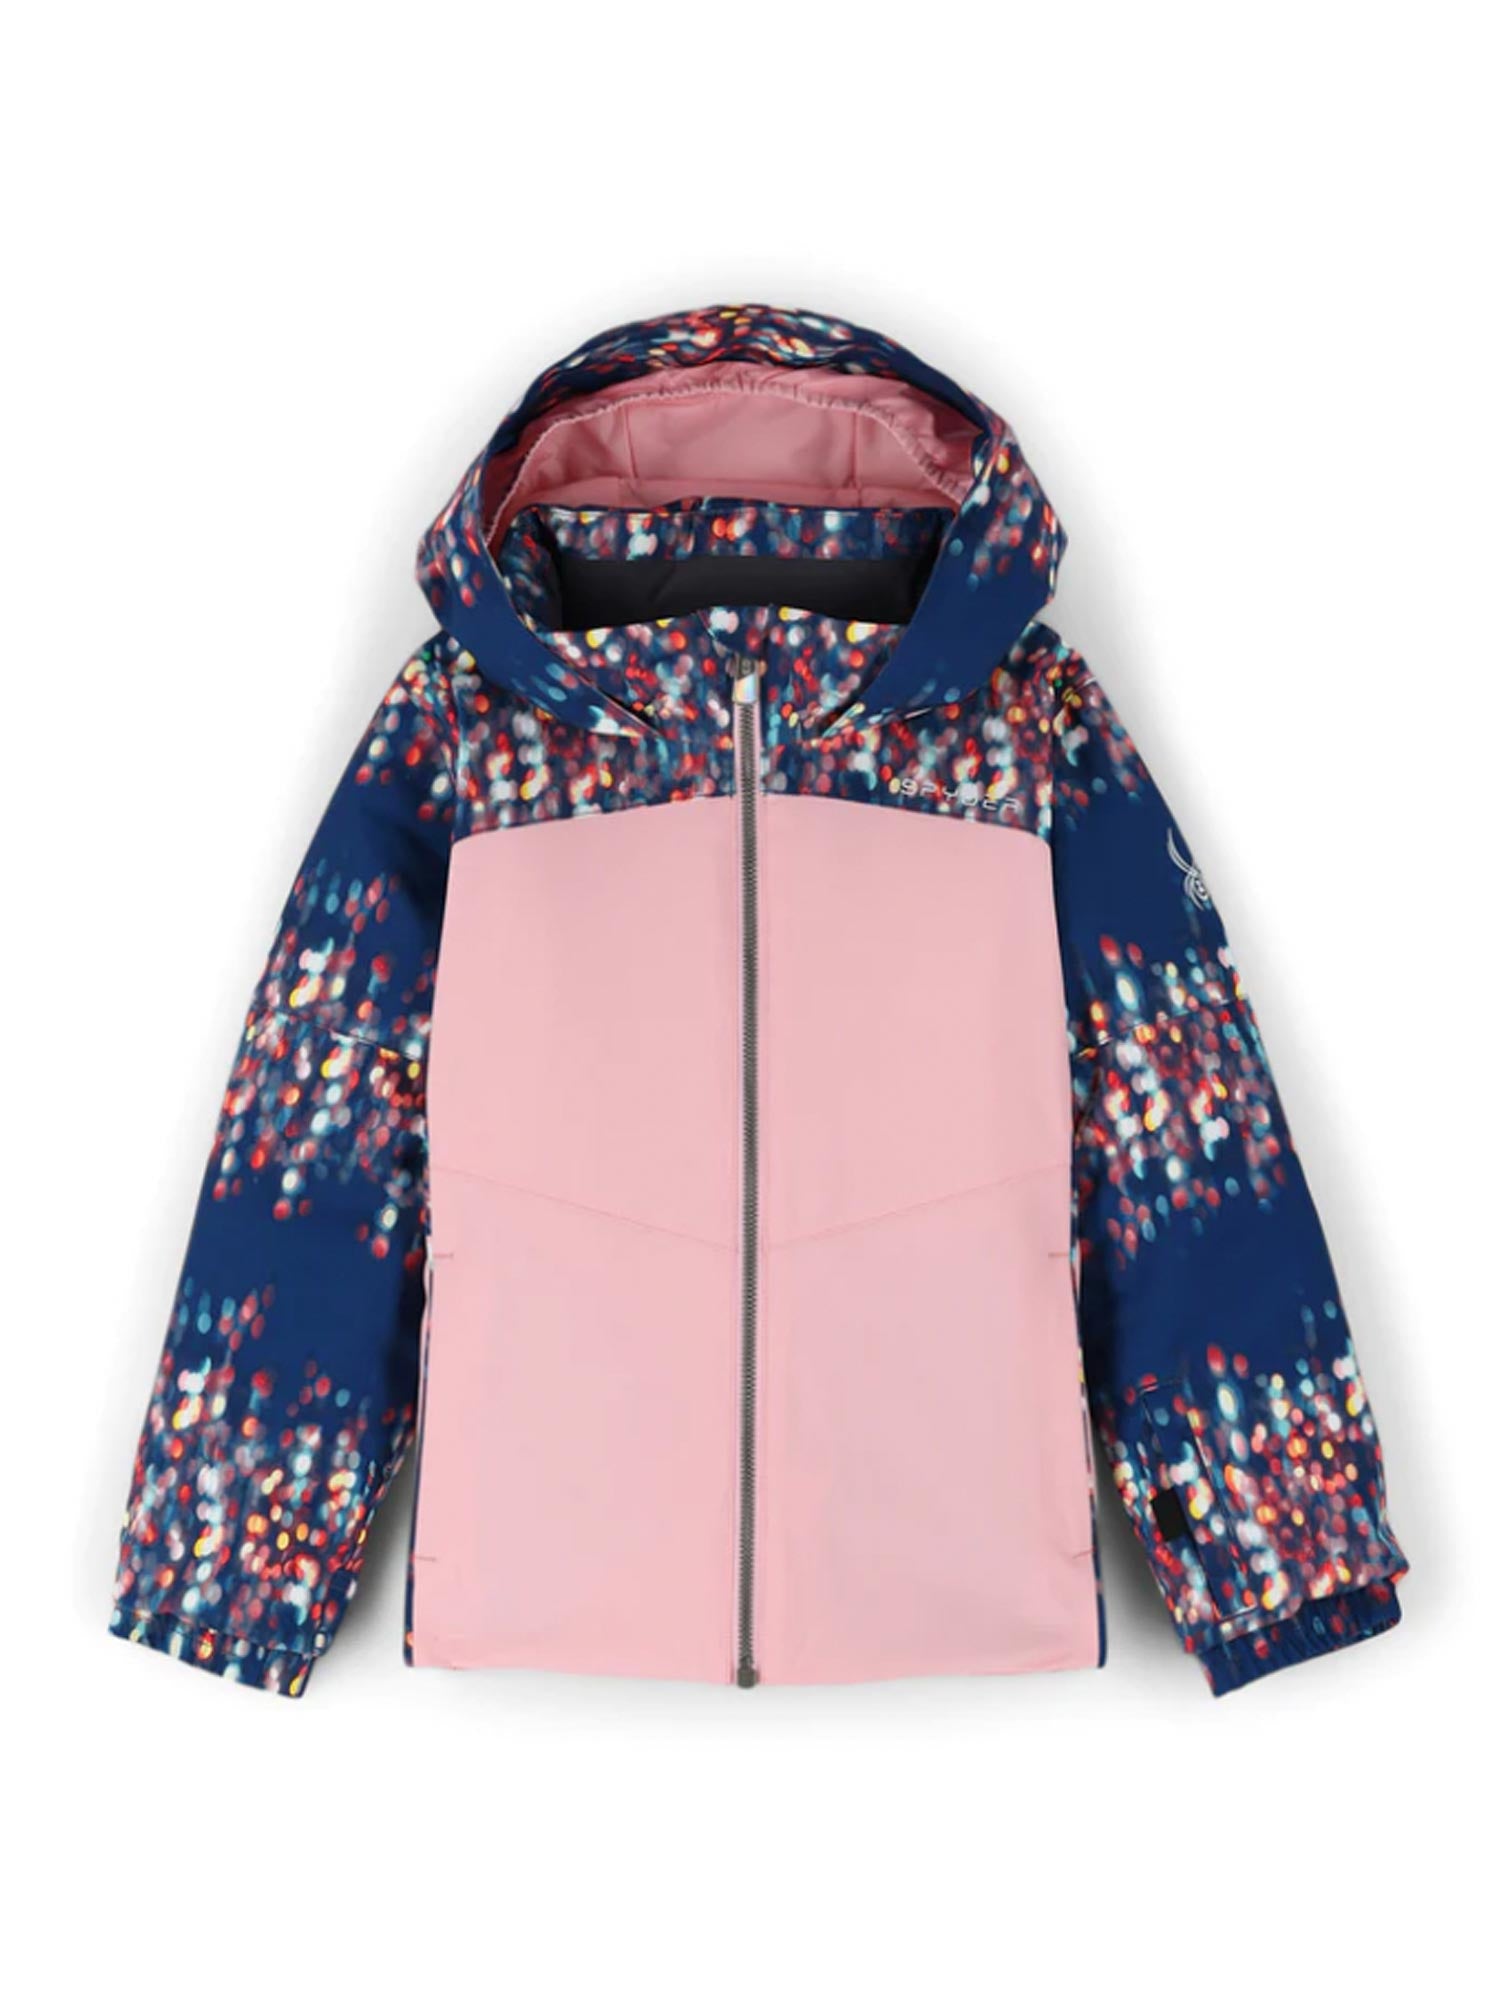 girls' Spyder ski jacket,  pink with sparkly pattern